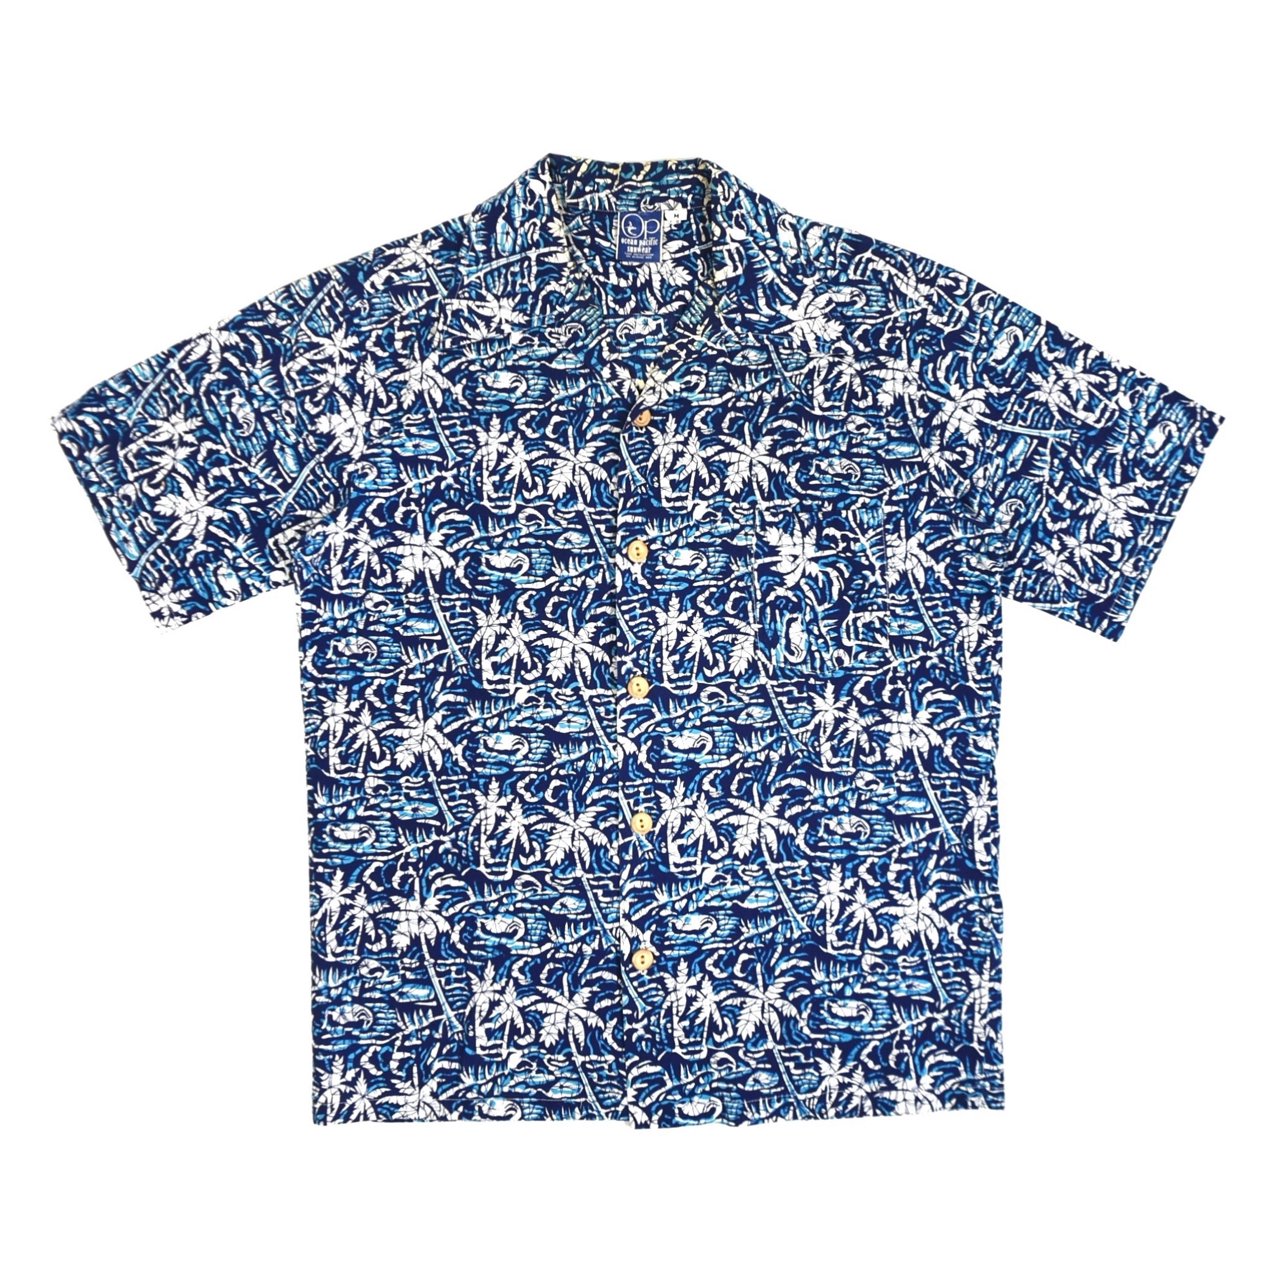 1970s OCEAN PACIFIC SUNWEAR Cotton Aloha shirts M 